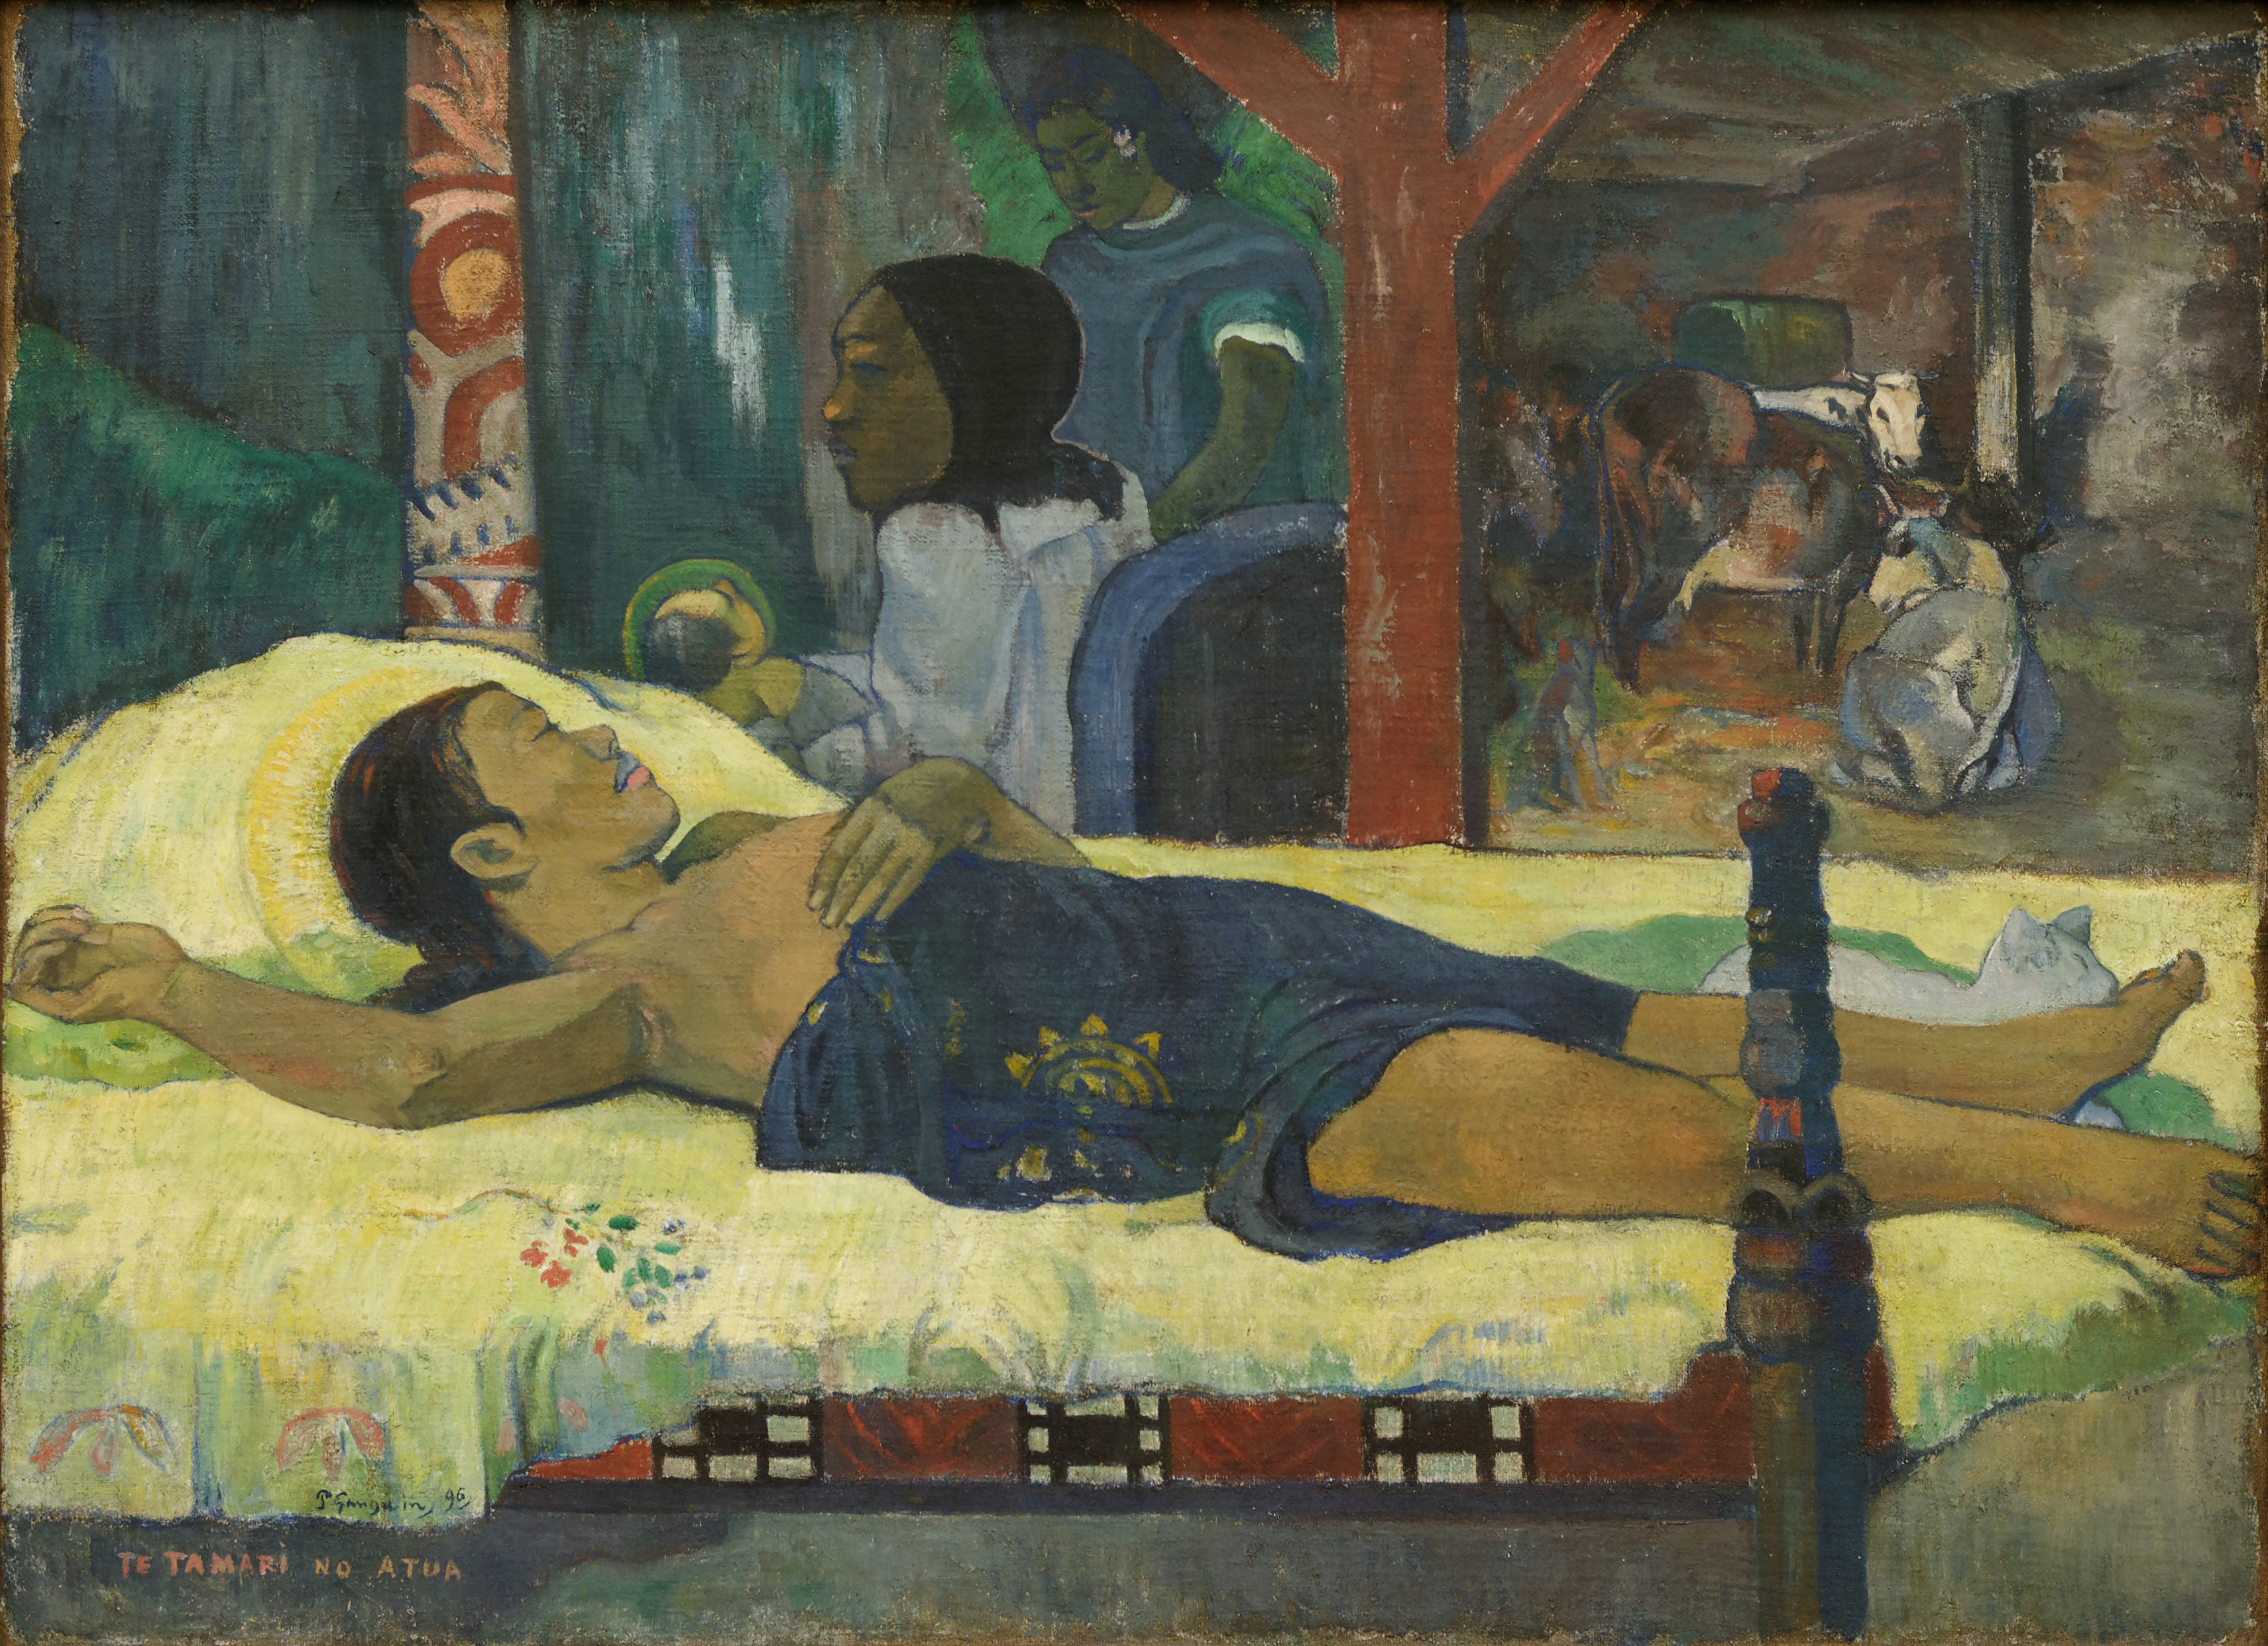 Te Tamari No Atua by Paul Gauguin - 1896 - 94 x 129 cm Neue Pinakothek